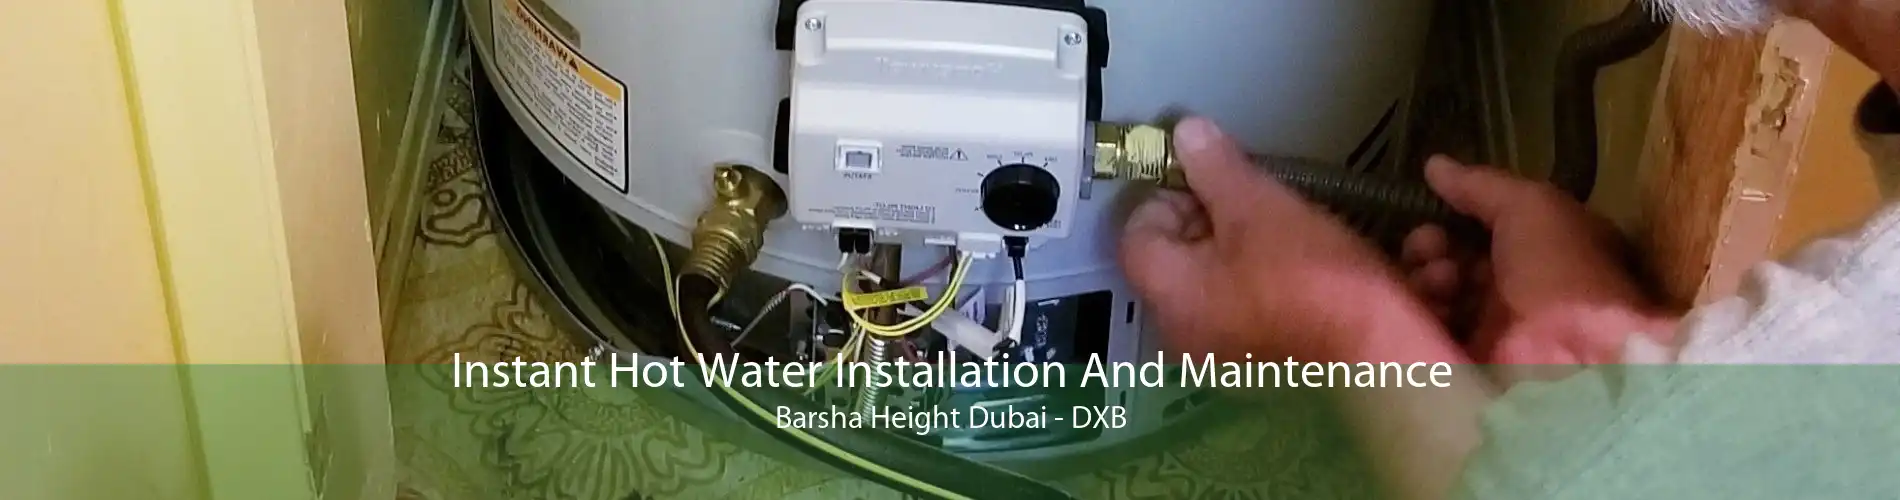 Instant Hot Water Installation And Maintenance Barsha Height Dubai - DXB